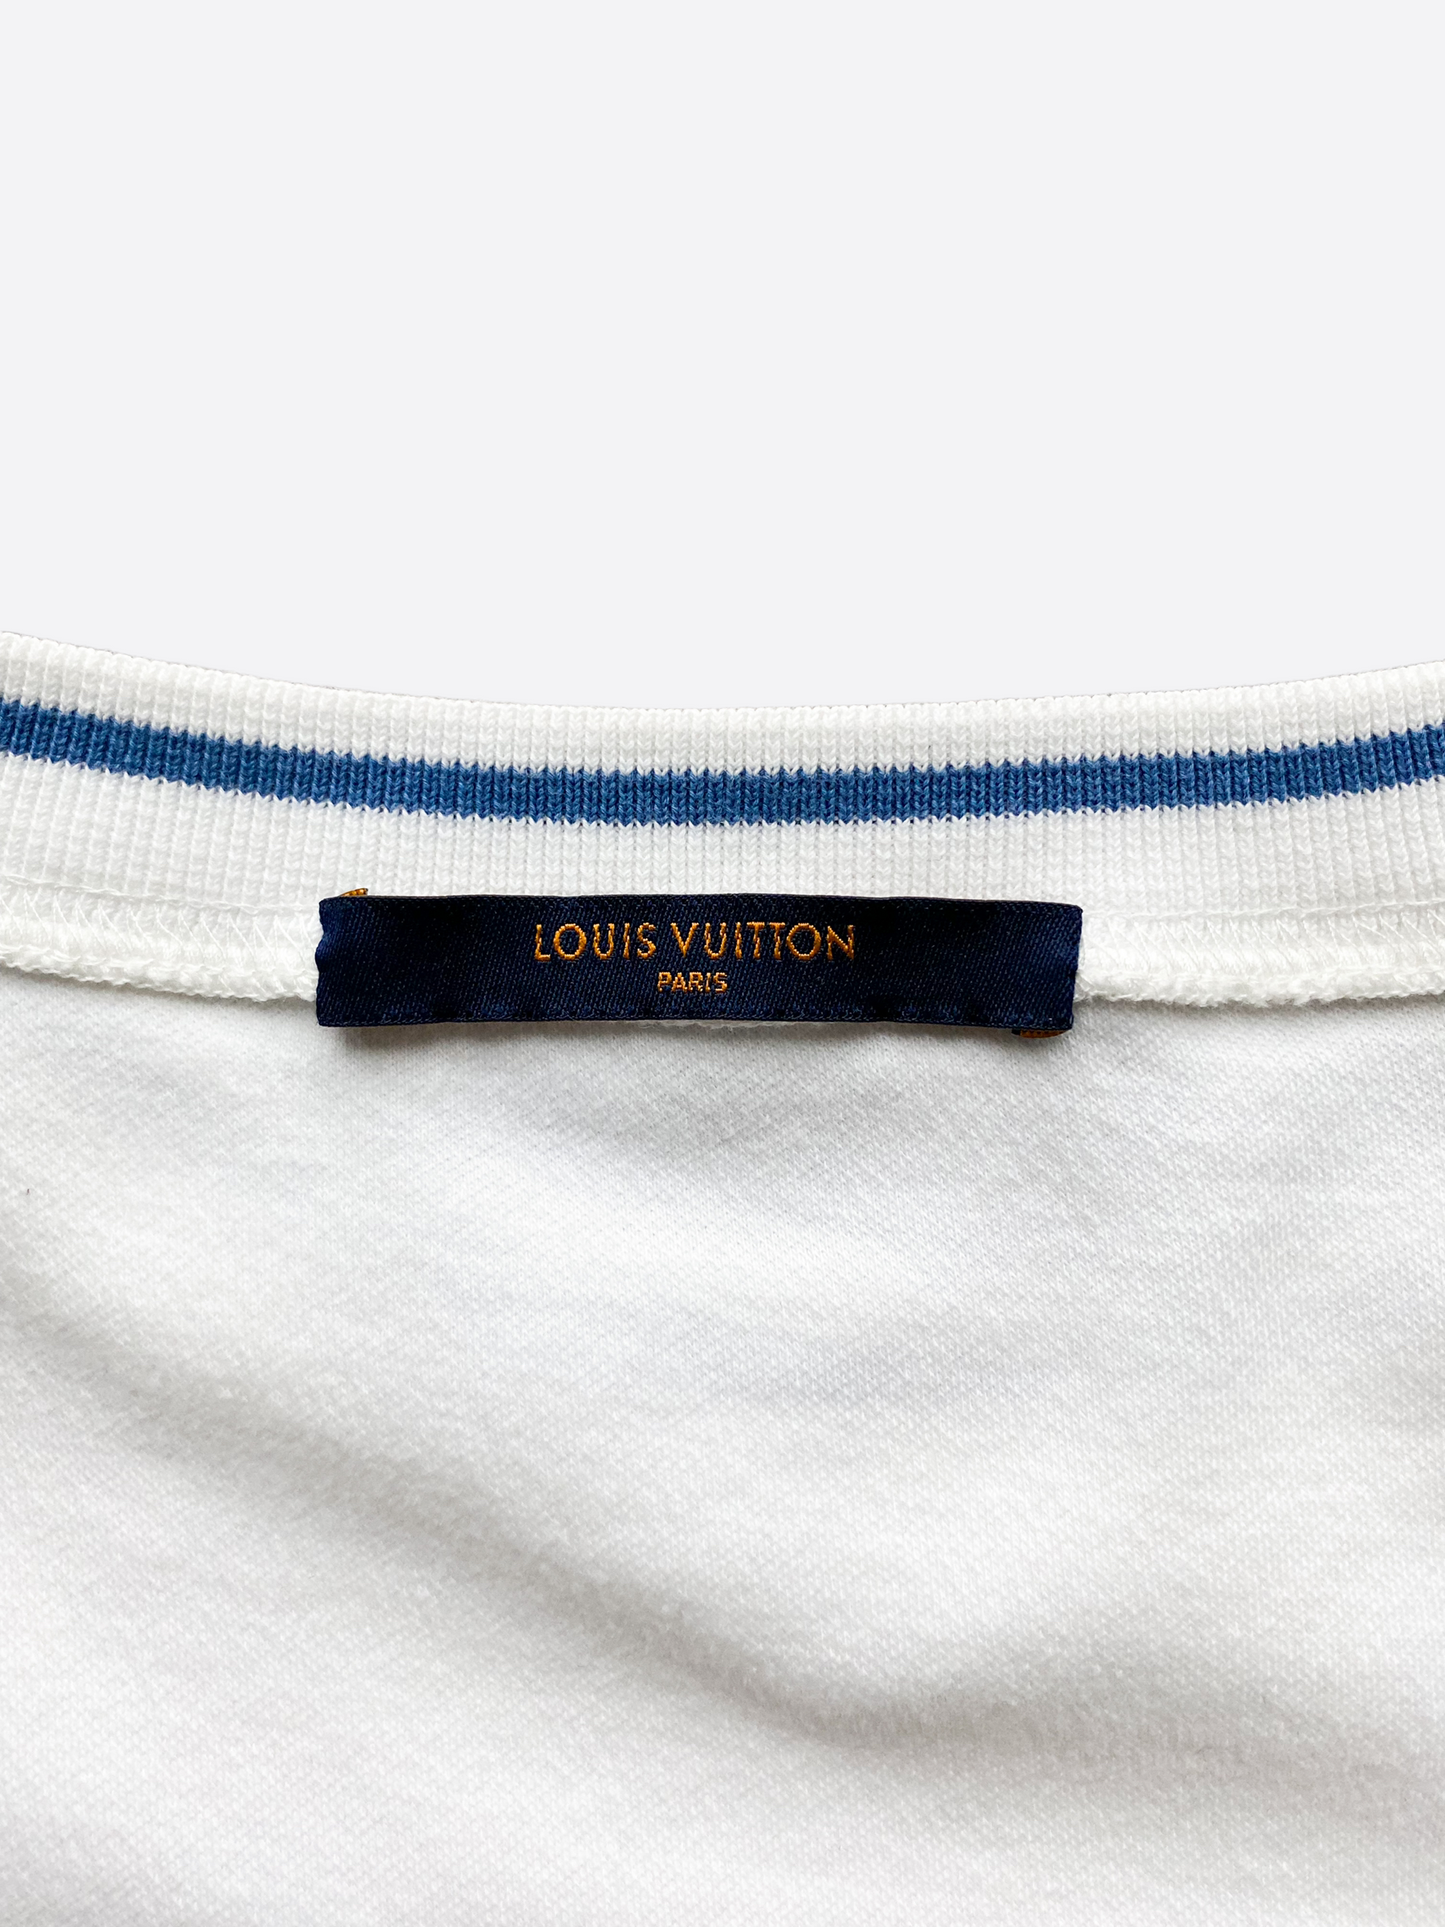 LOUIS VUITTON Men's National Parks Patches Tee  Louis vuitton men, Louis  vuitton shirts, Clothes design